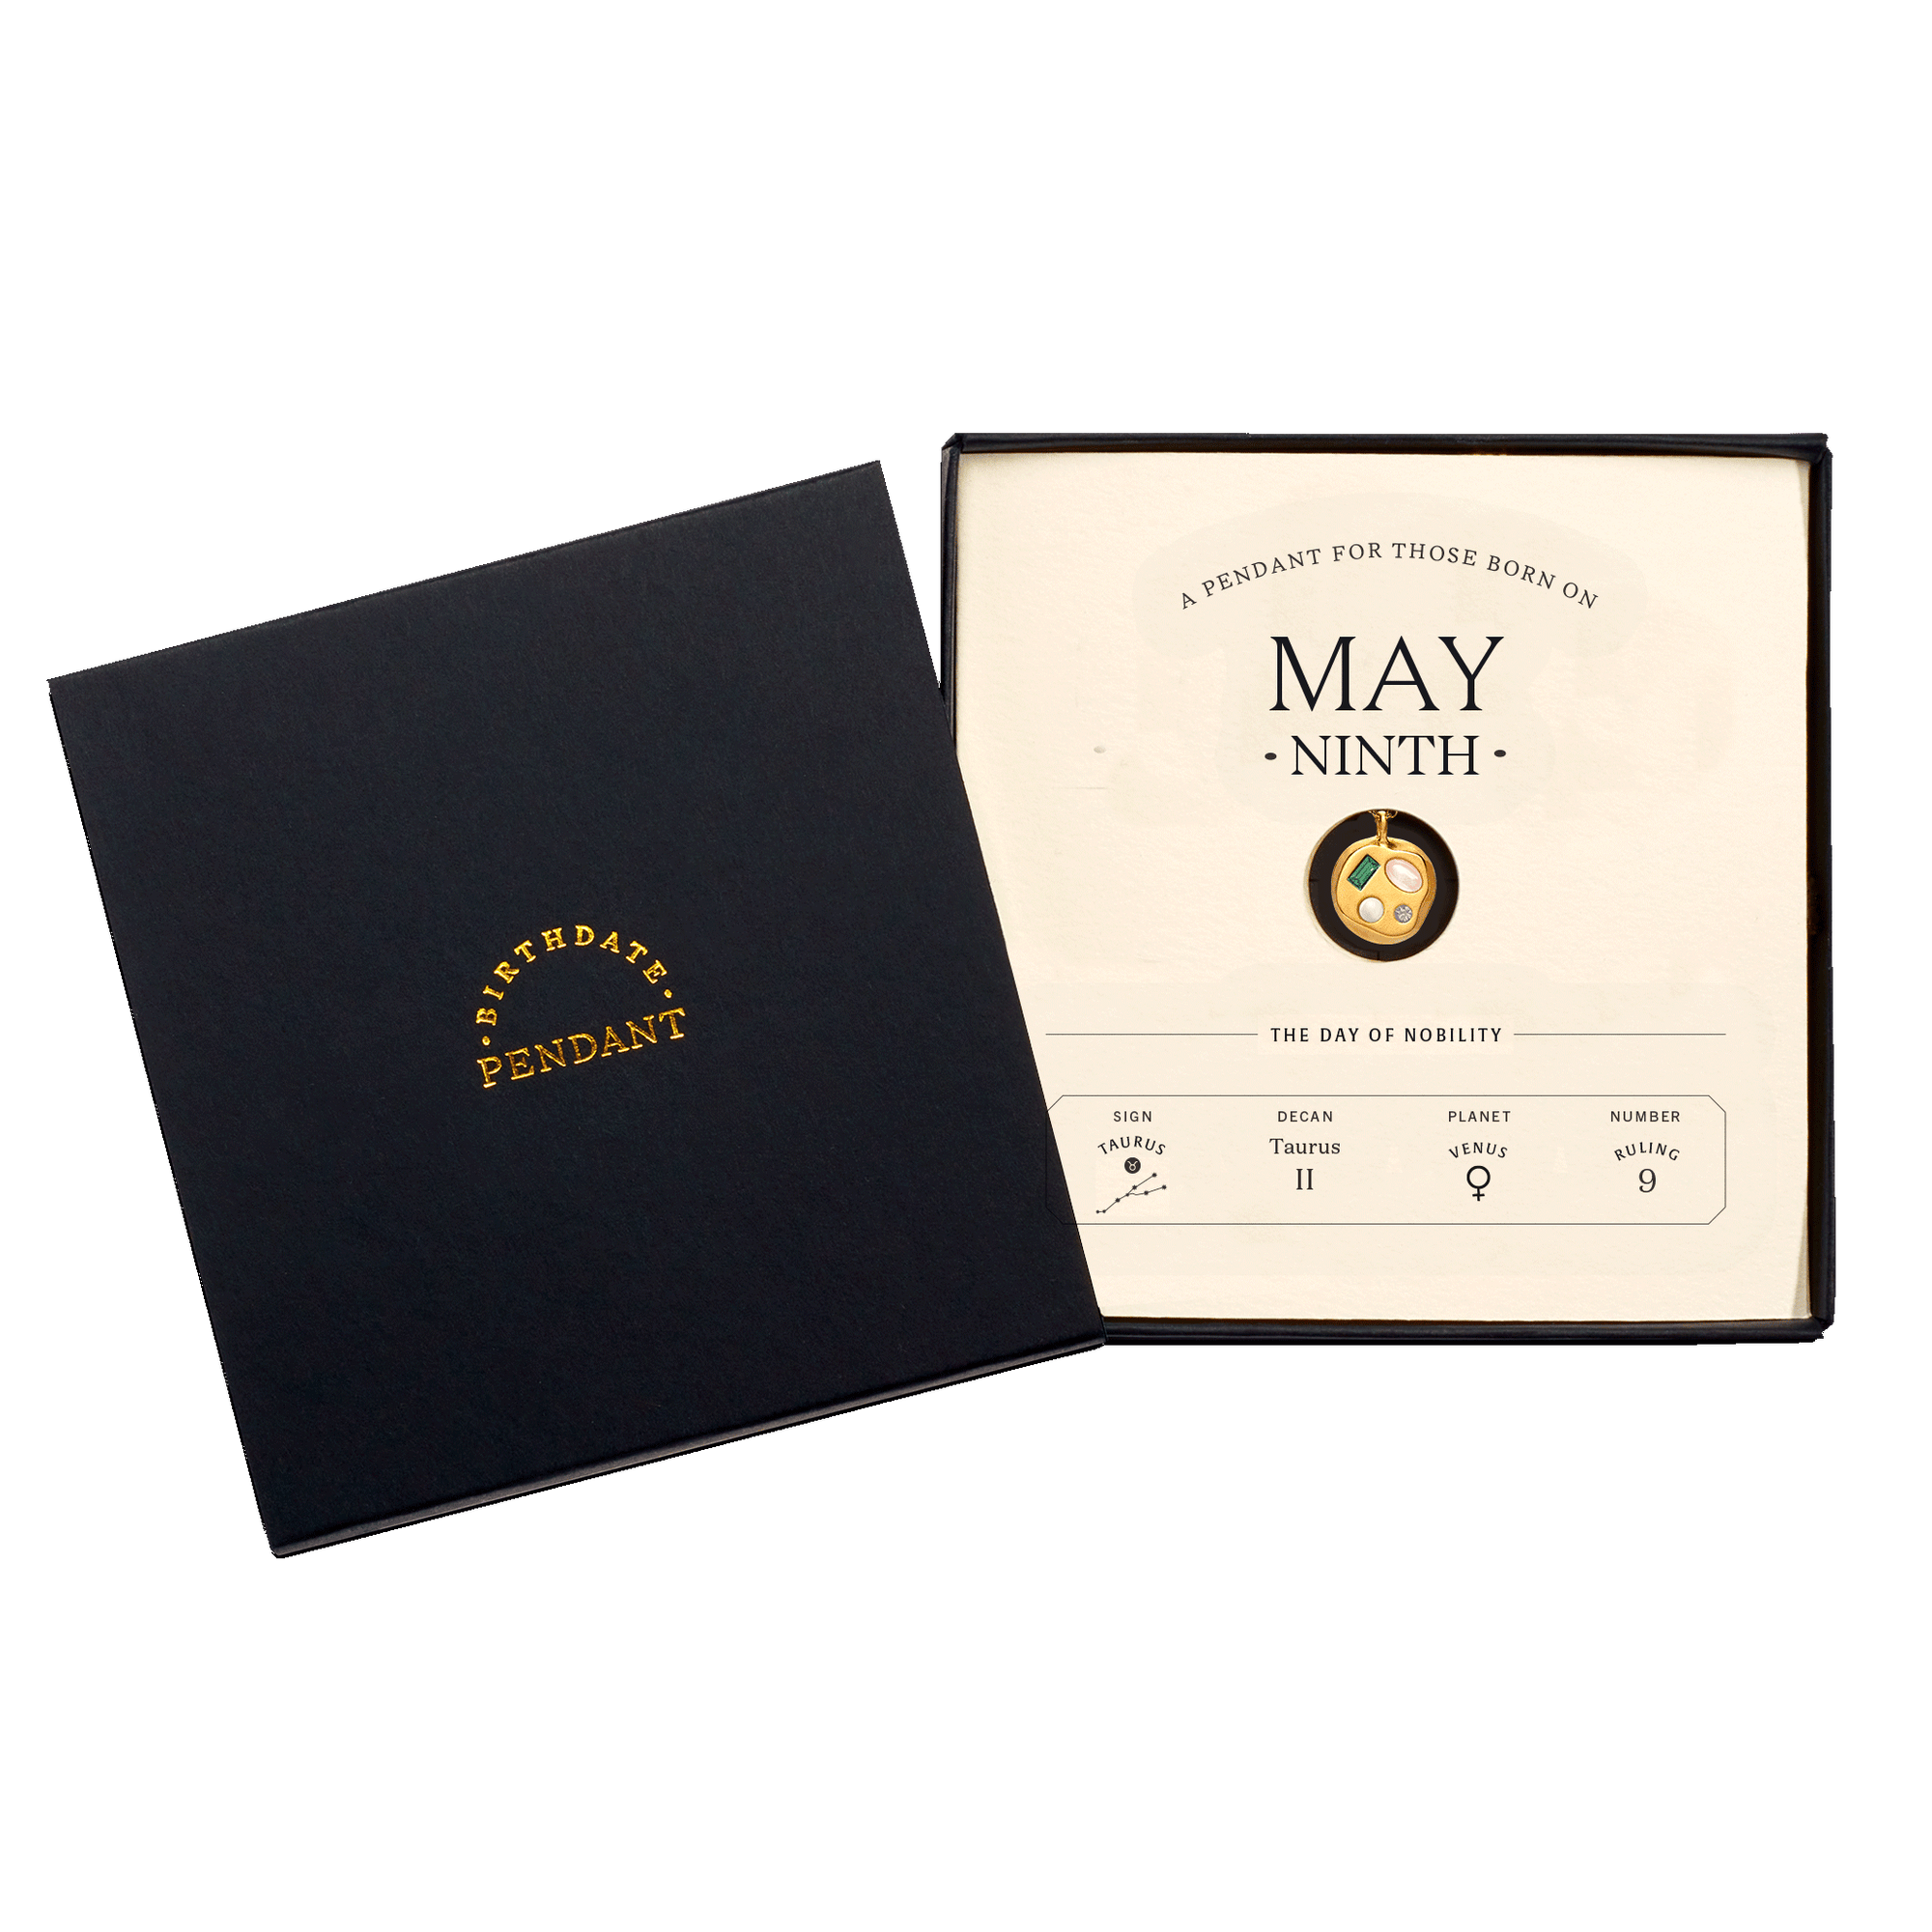 The May Ninth Pendant inside its box